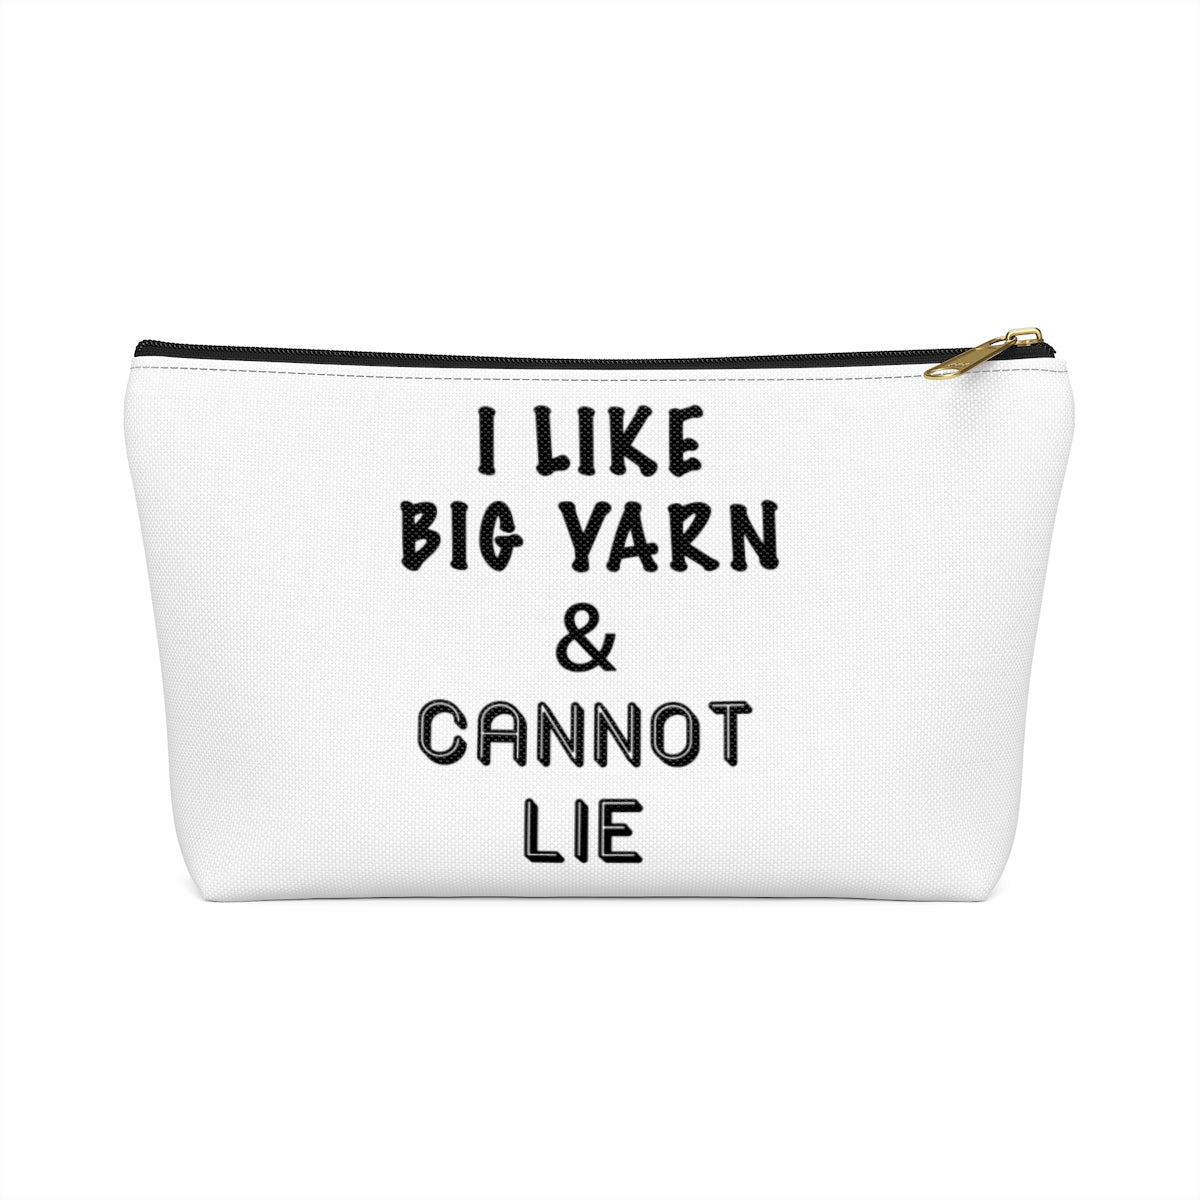 “I Like Big Yarn & Cannot Lie” - White Accessory Pouch